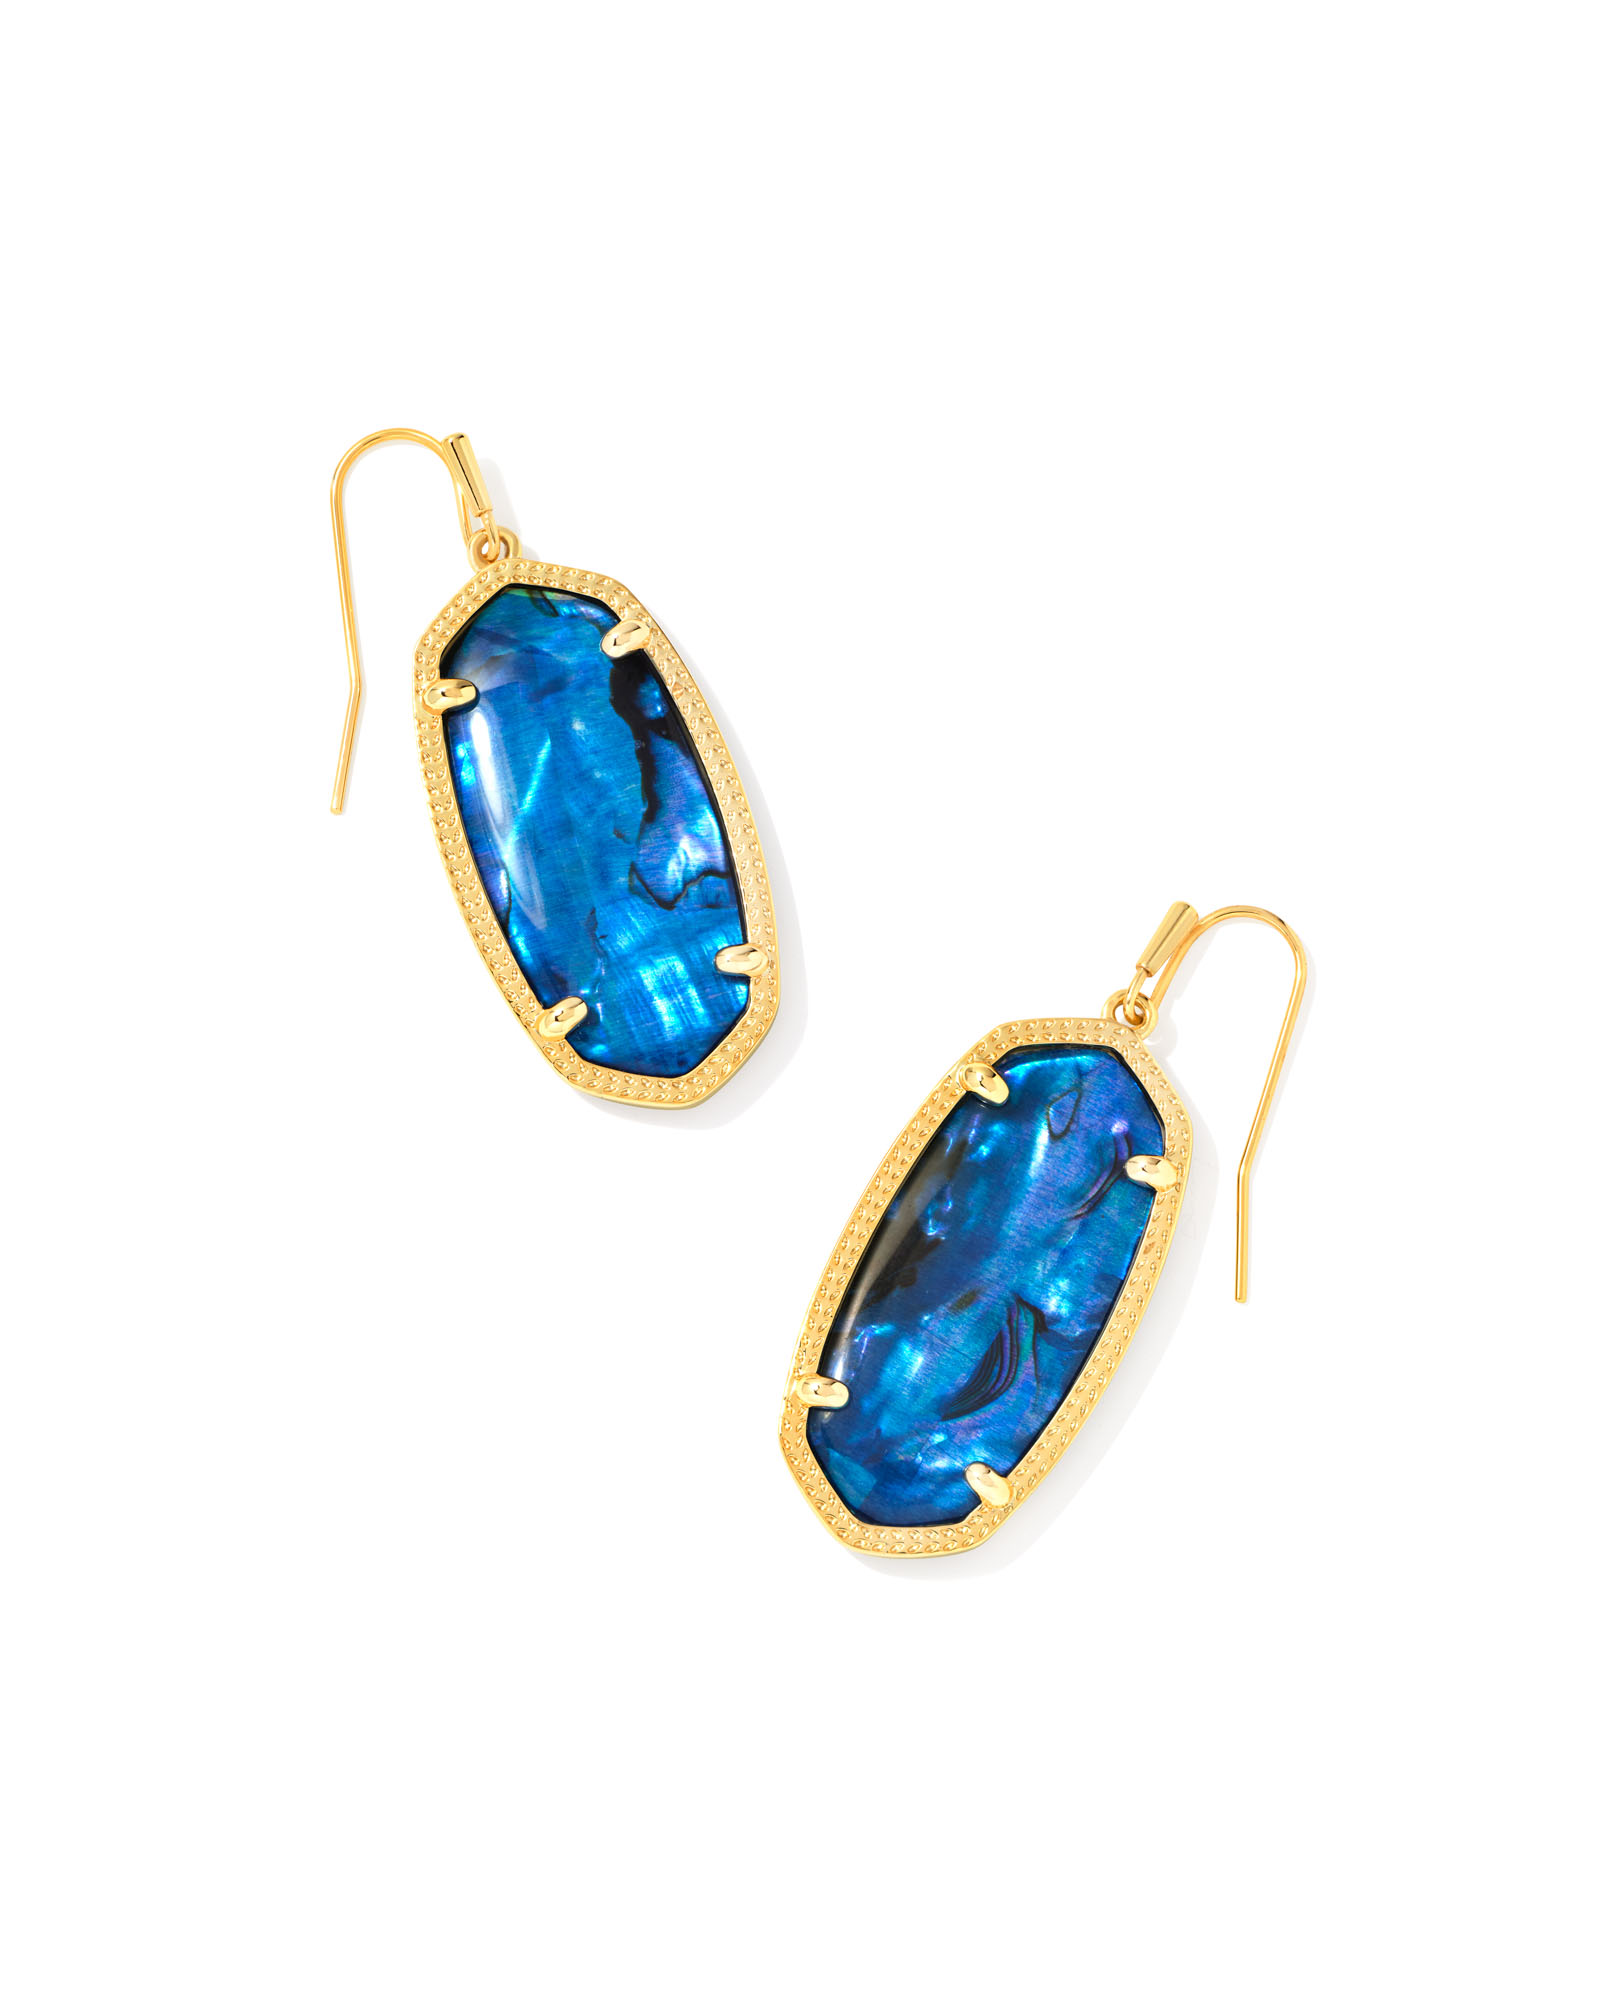 Personalized Earrings Bridesmaid Gifts Customize Earrings 14K Gold Earrings Gemstone Earrings Labradorite Earrings